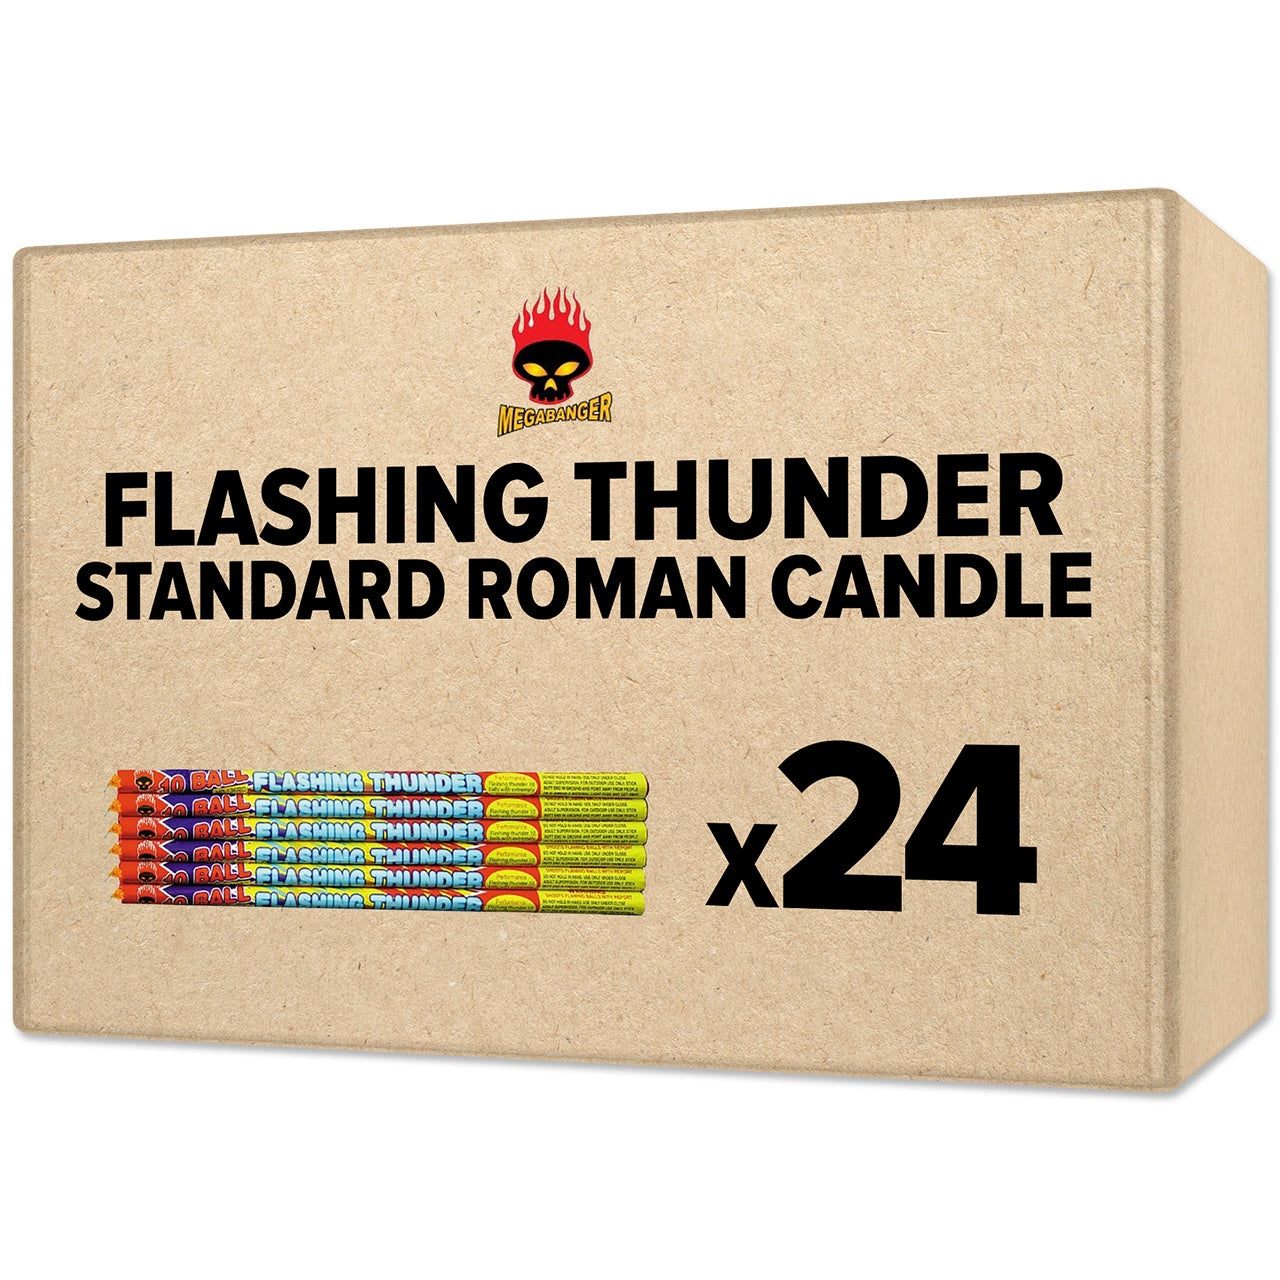 Flashing Thunder Standard Roman Candle